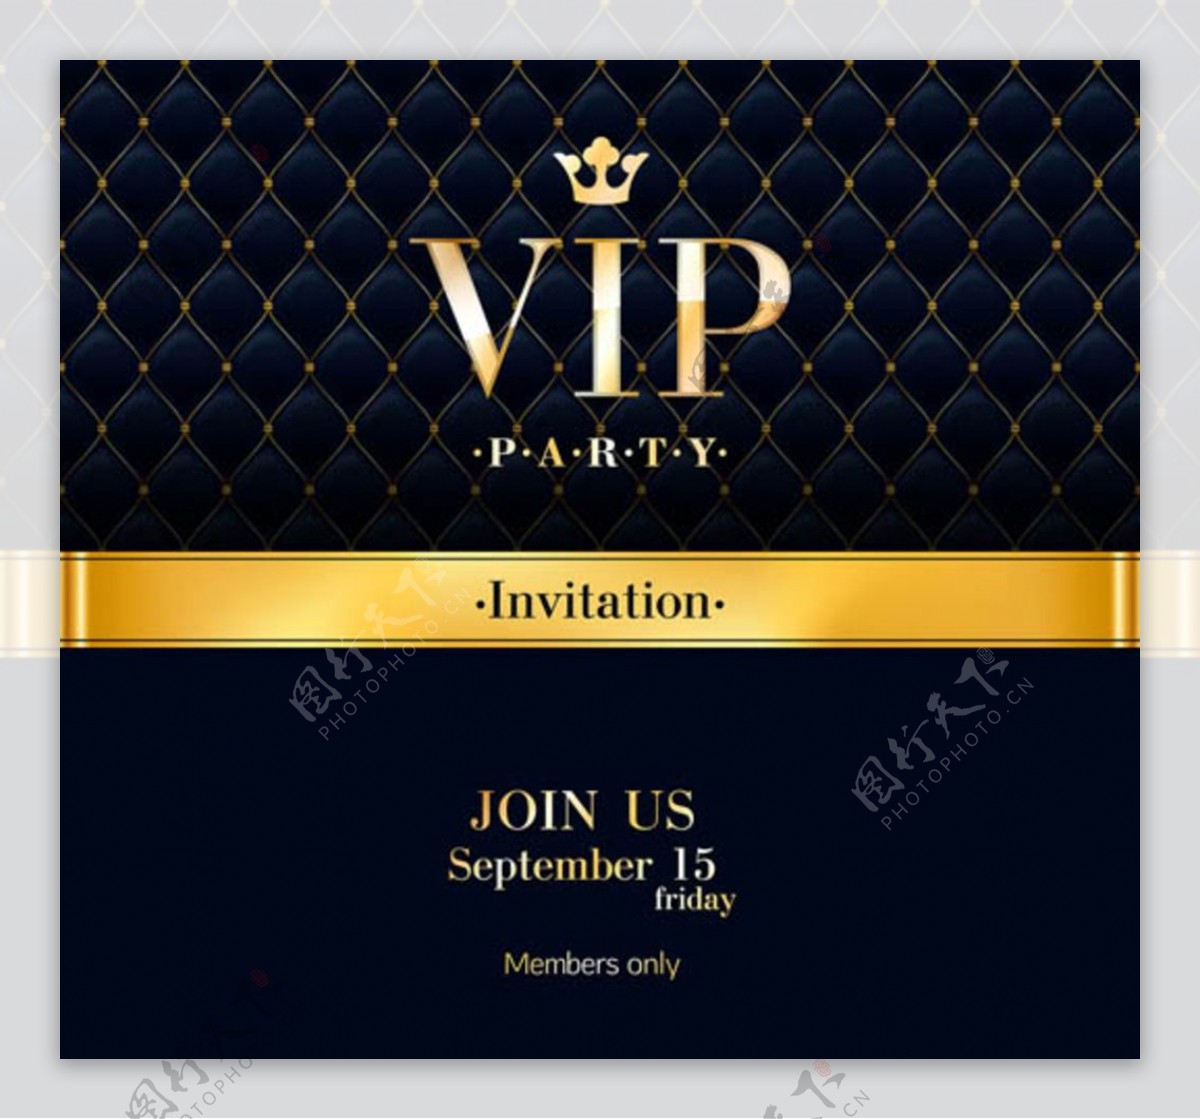 VIP邀请函